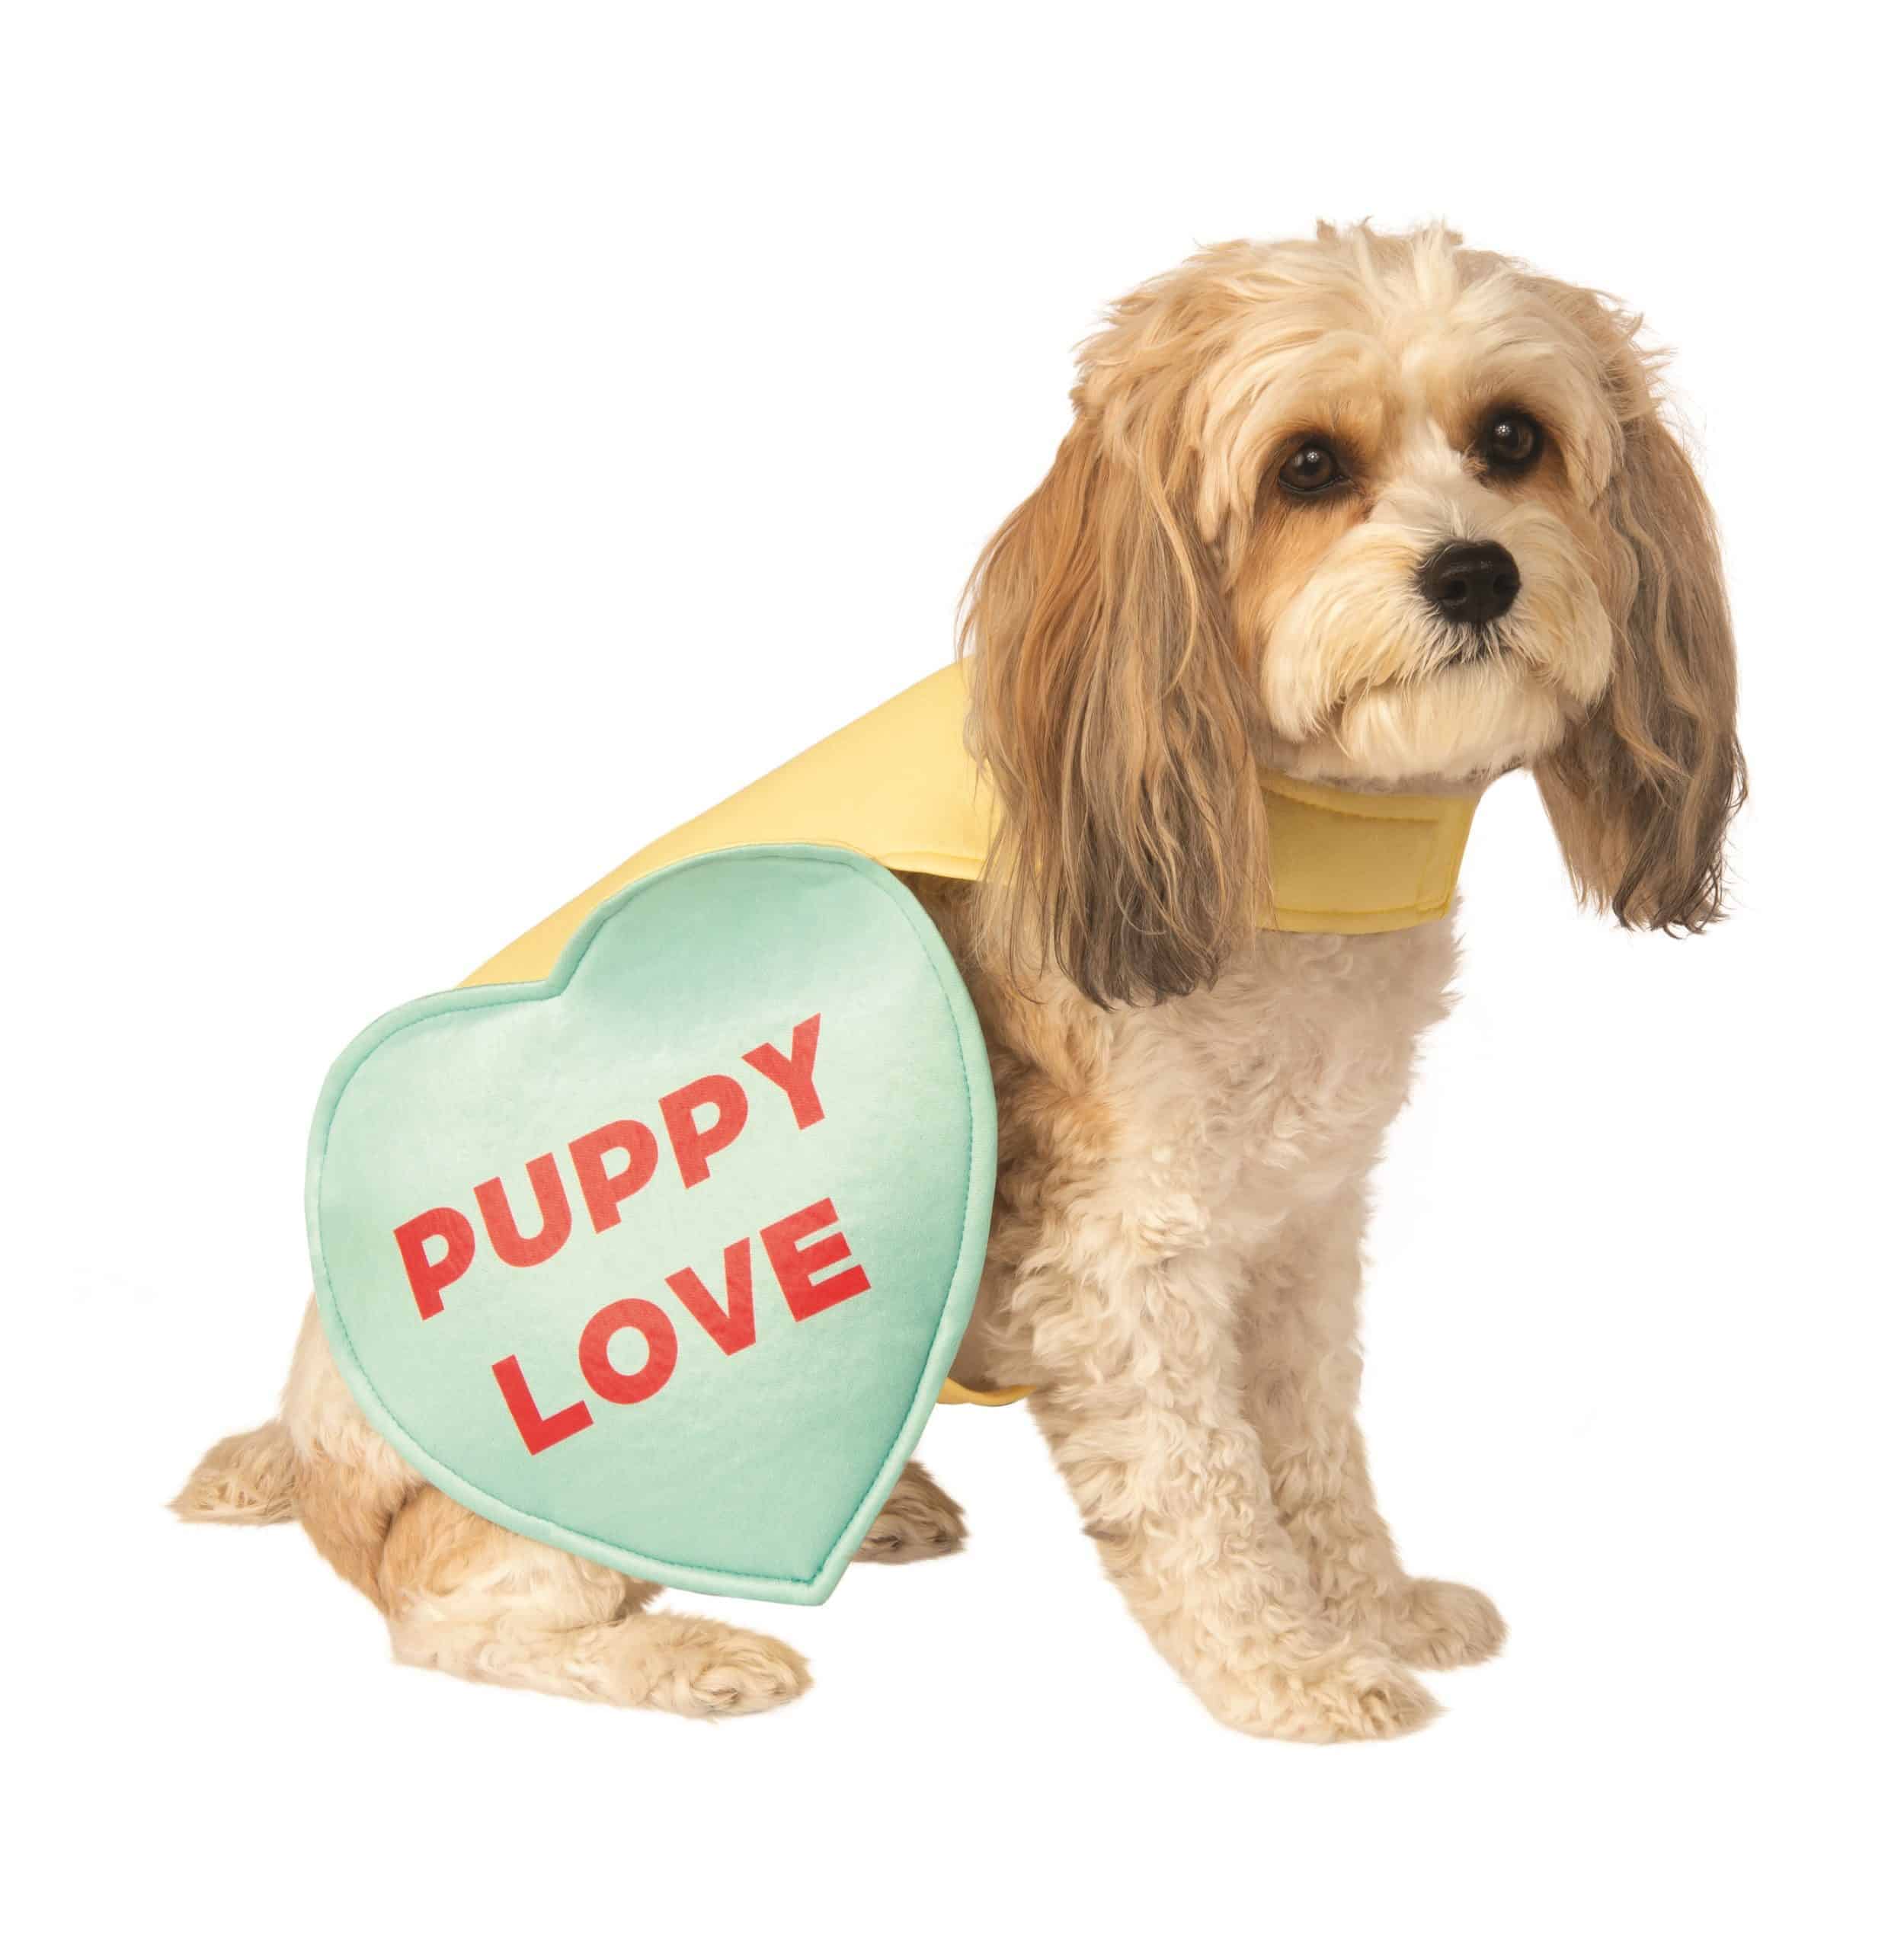 Pet heart. Dogs and Candy. Candy dogshop. Кэнди дог. Мой питомец собака Кэнди.